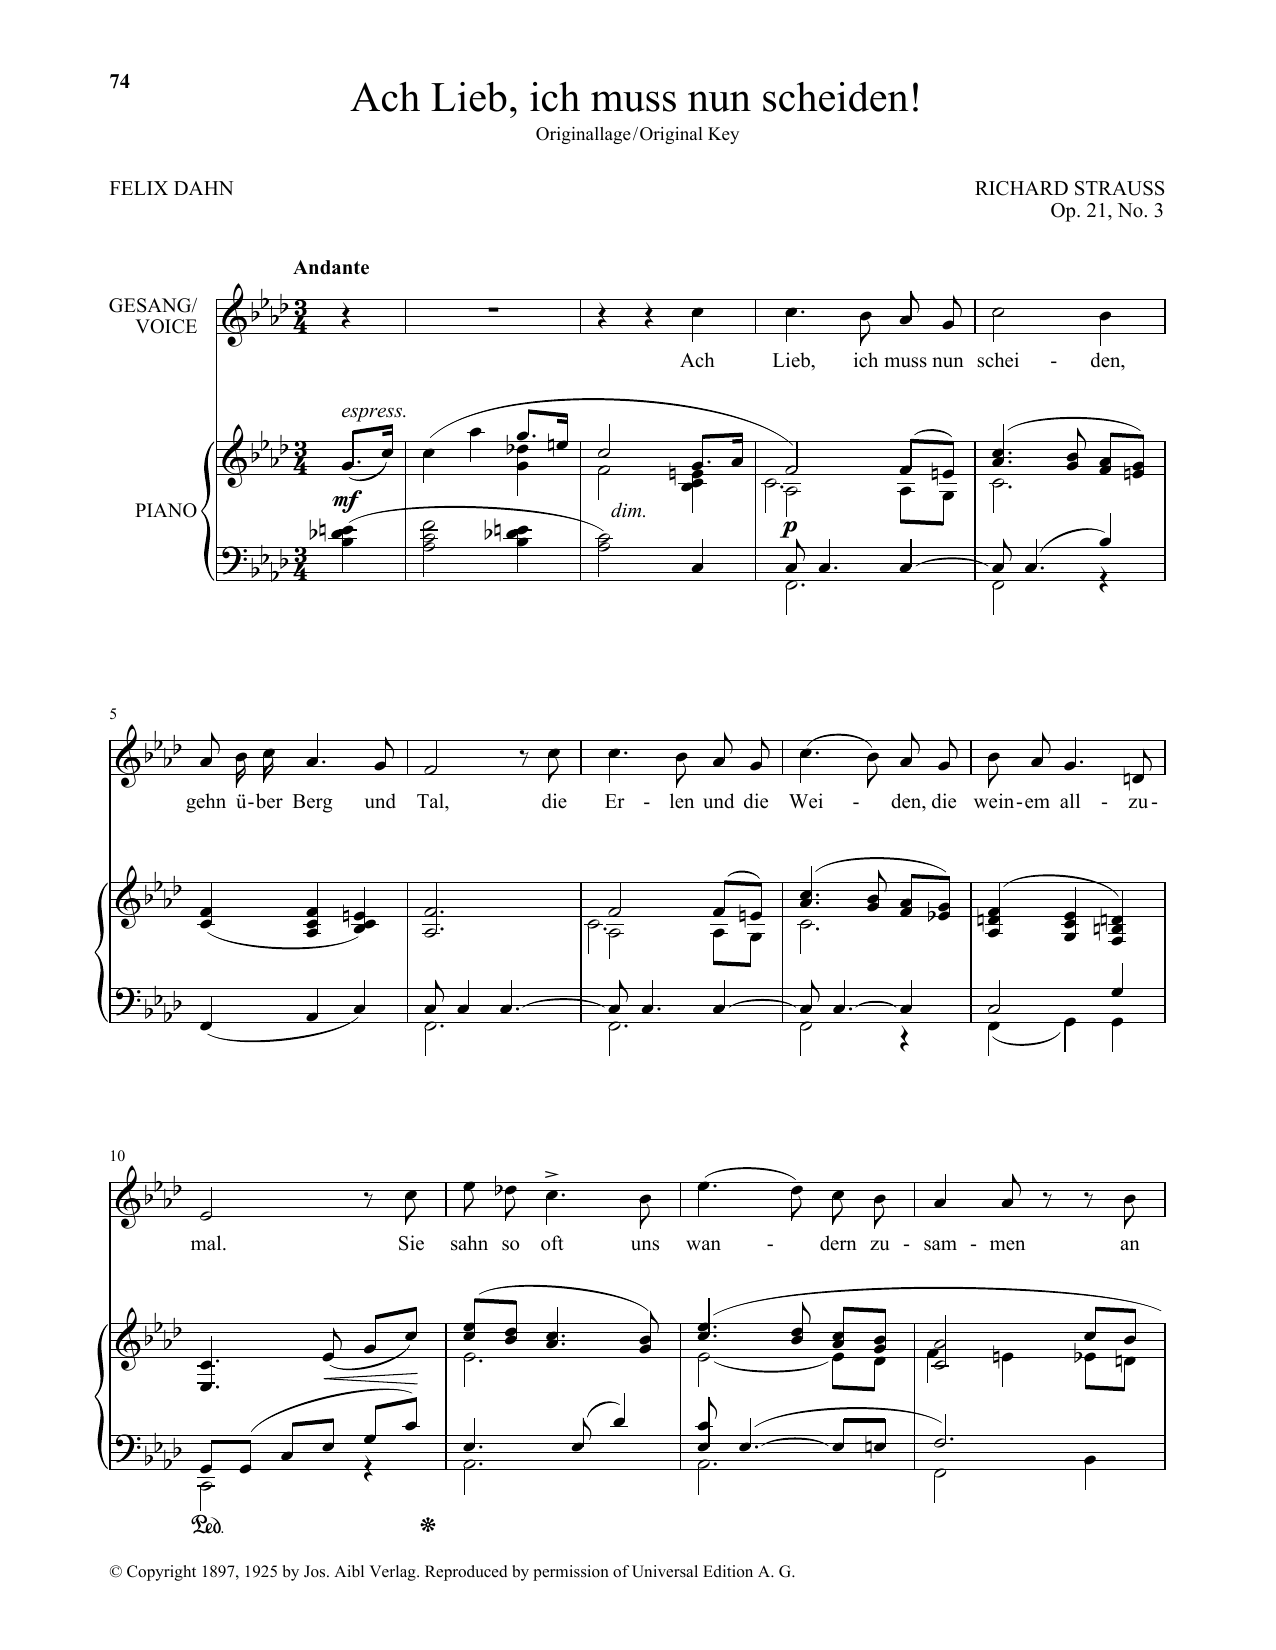 Richard Strauss Ach Lieb, Ich Muss Nun Scheiden! (High Voice) Sheet Music Notes & Chords for Piano & Vocal - Download or Print PDF